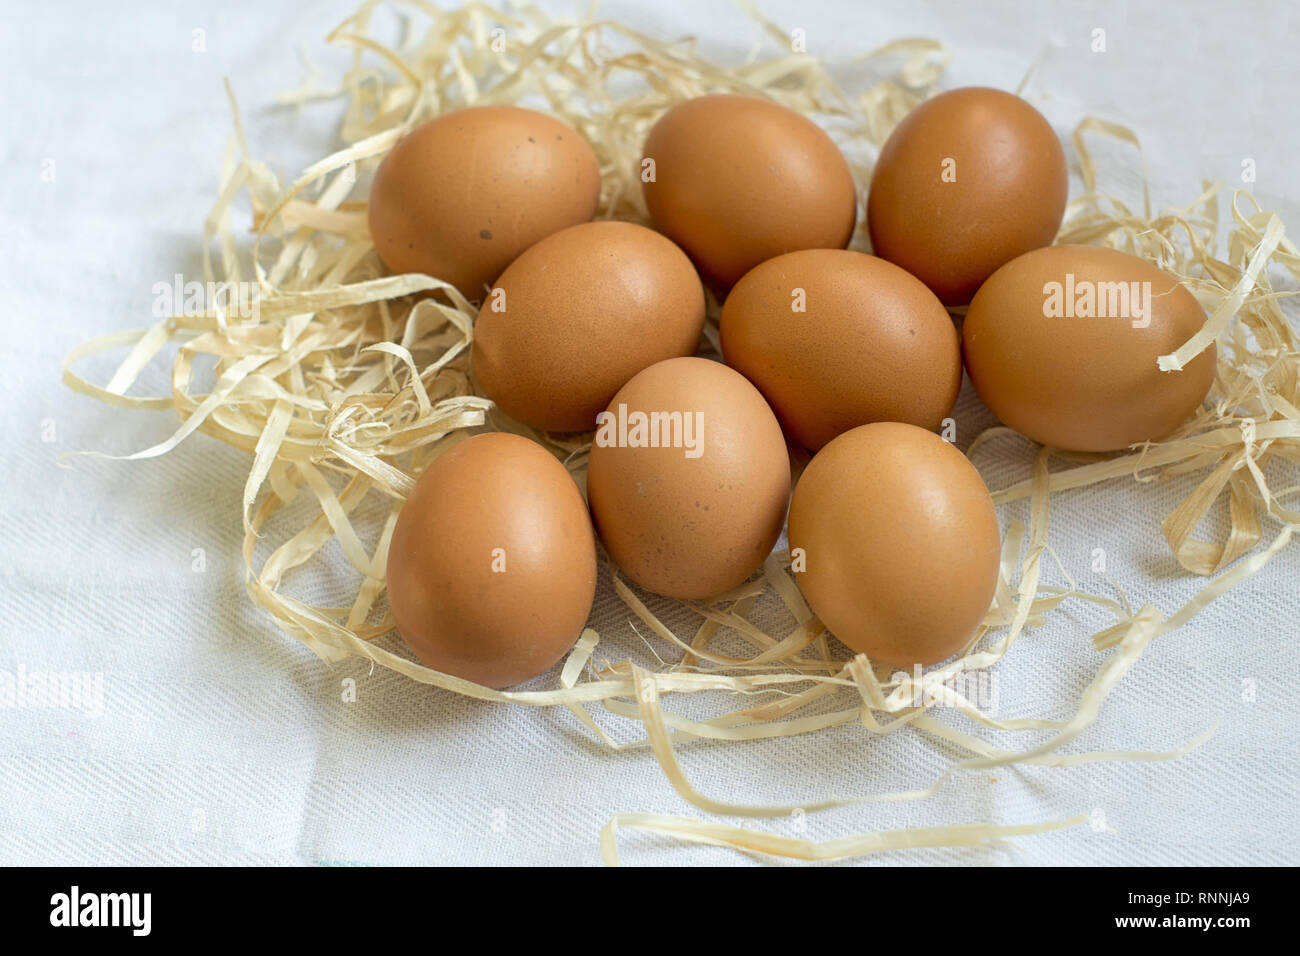 Fresh organic eggs in straw on white cloth Stock Photo